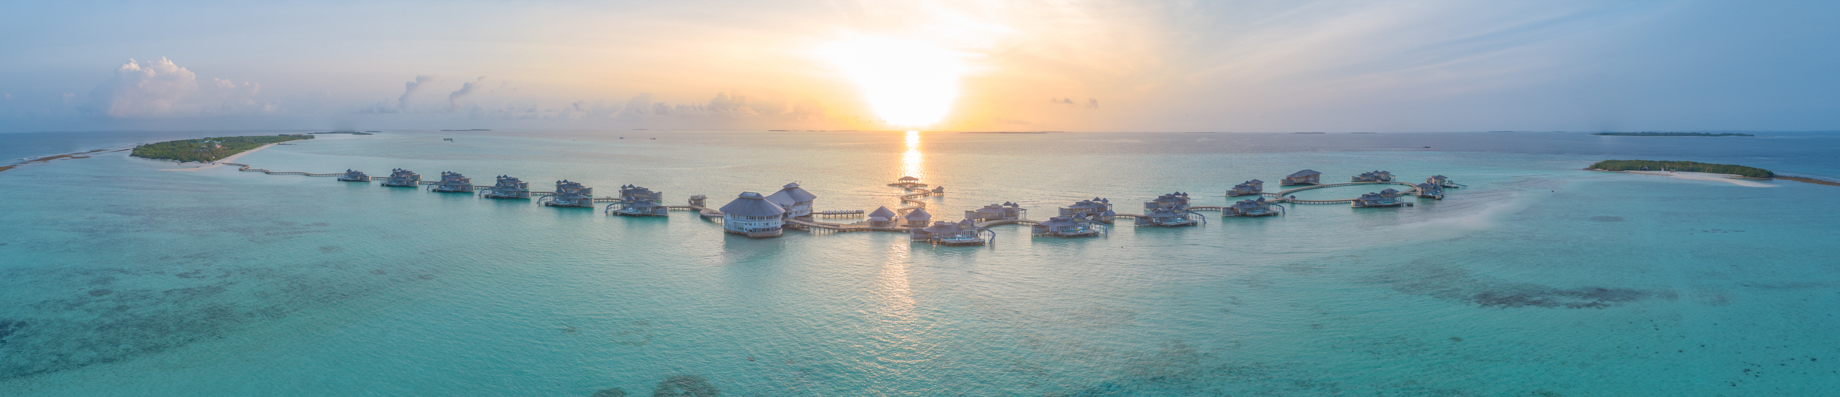 Soneva Jani Resort - Noonu Atoll, Medhufaru, Maldives - Aerial Panorama Sunset